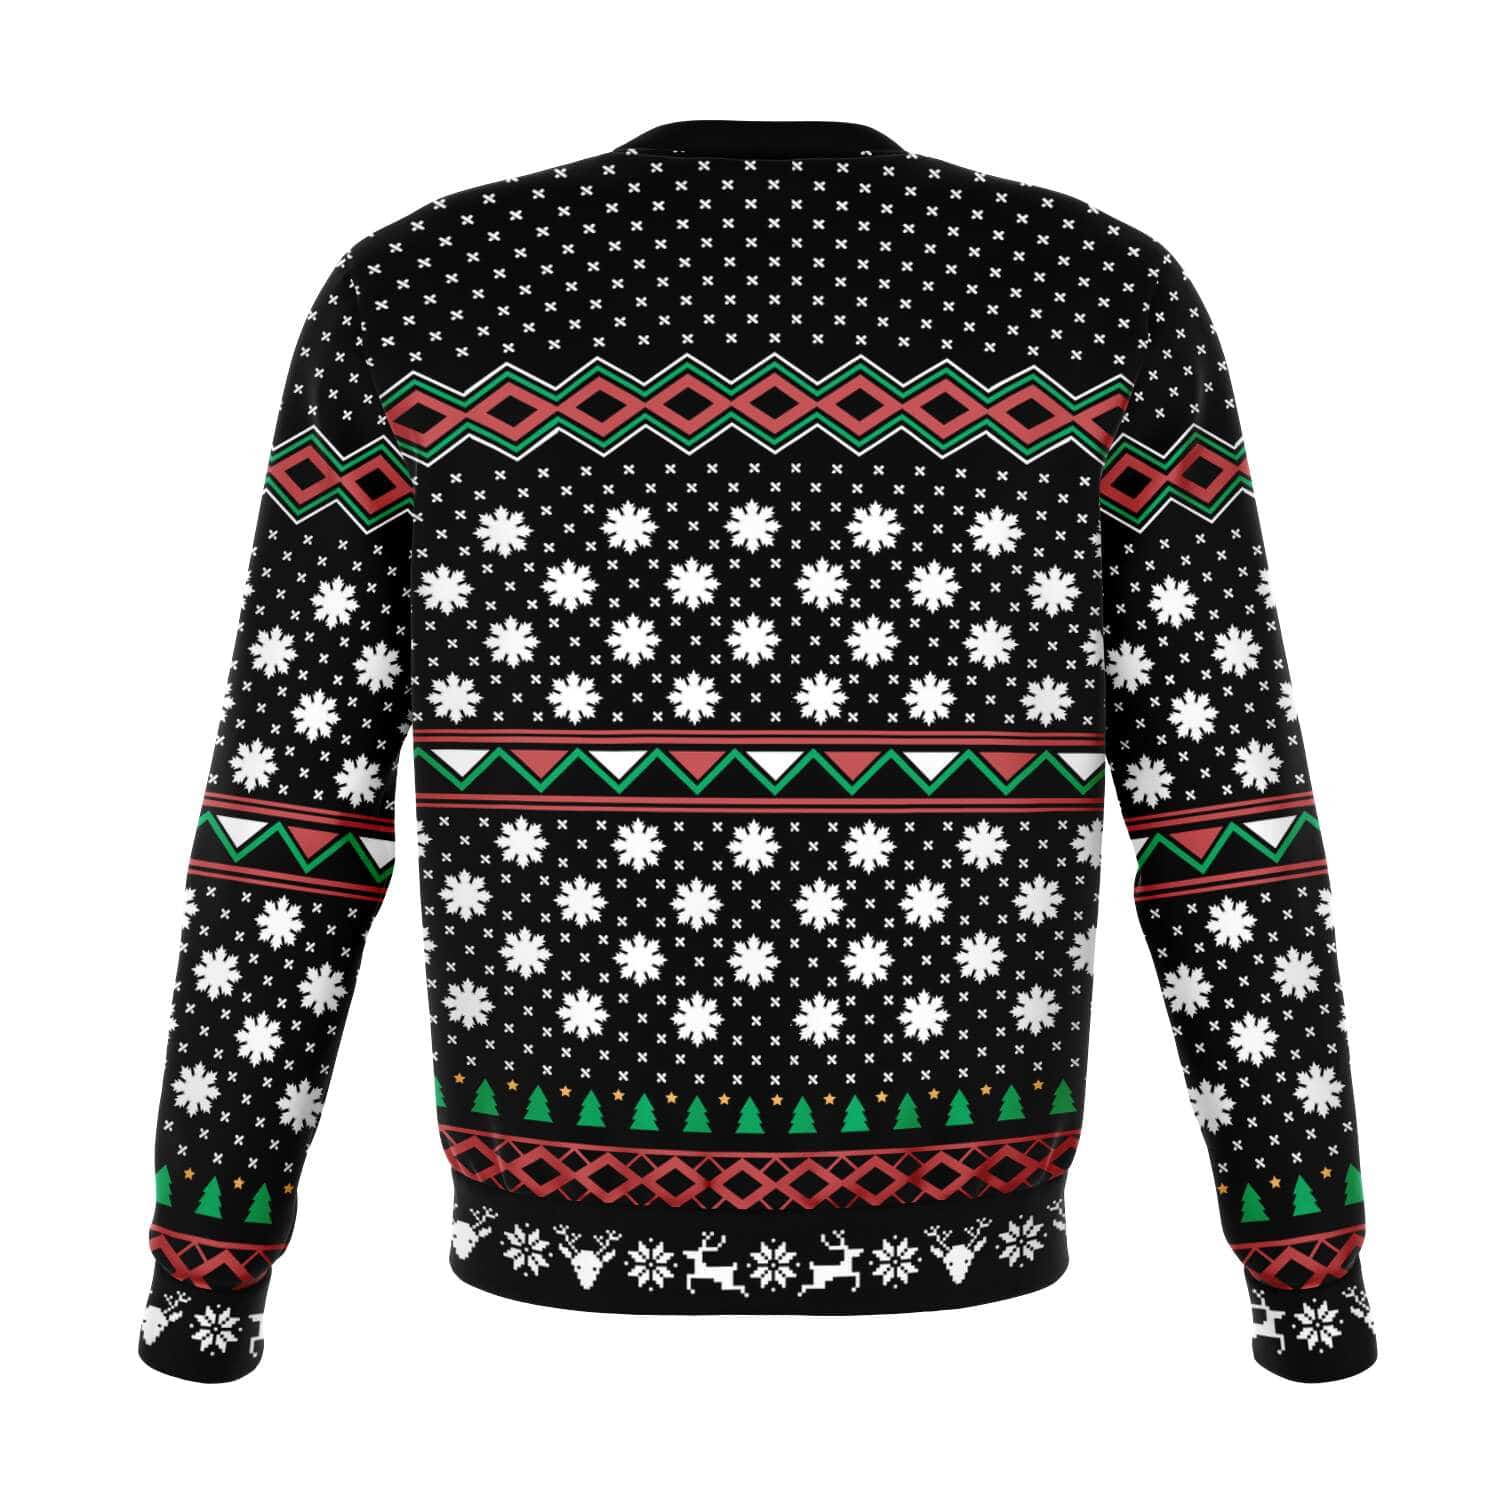 Crocheting With My Gnomies - Funny Crocheter Gift Ugly Christmas Sweater (Sweatshirt)